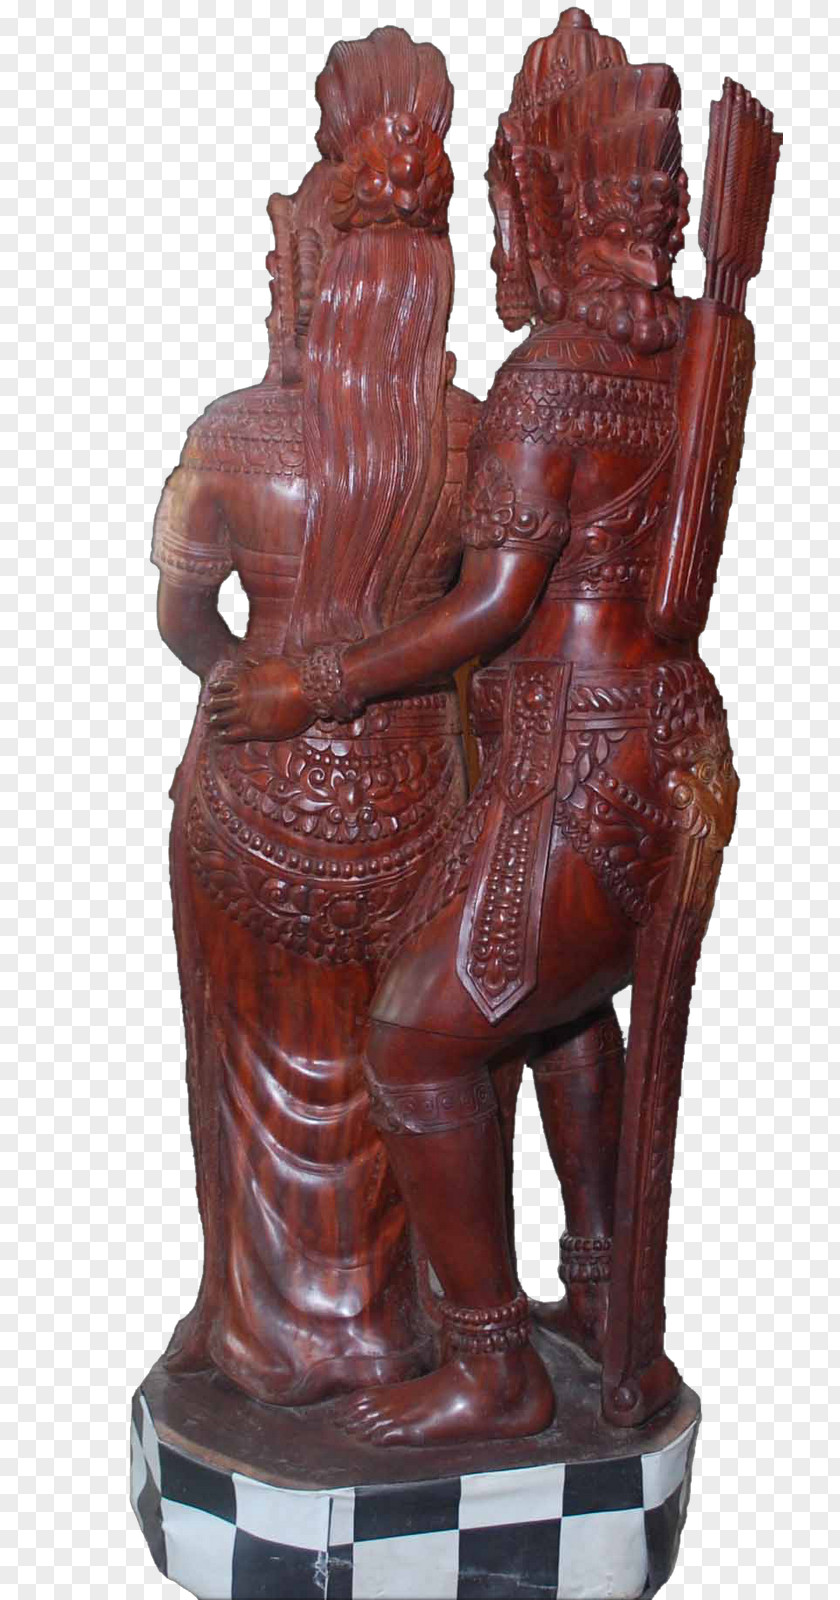 Statue Bronze Sculpture Figurine Carving PNG